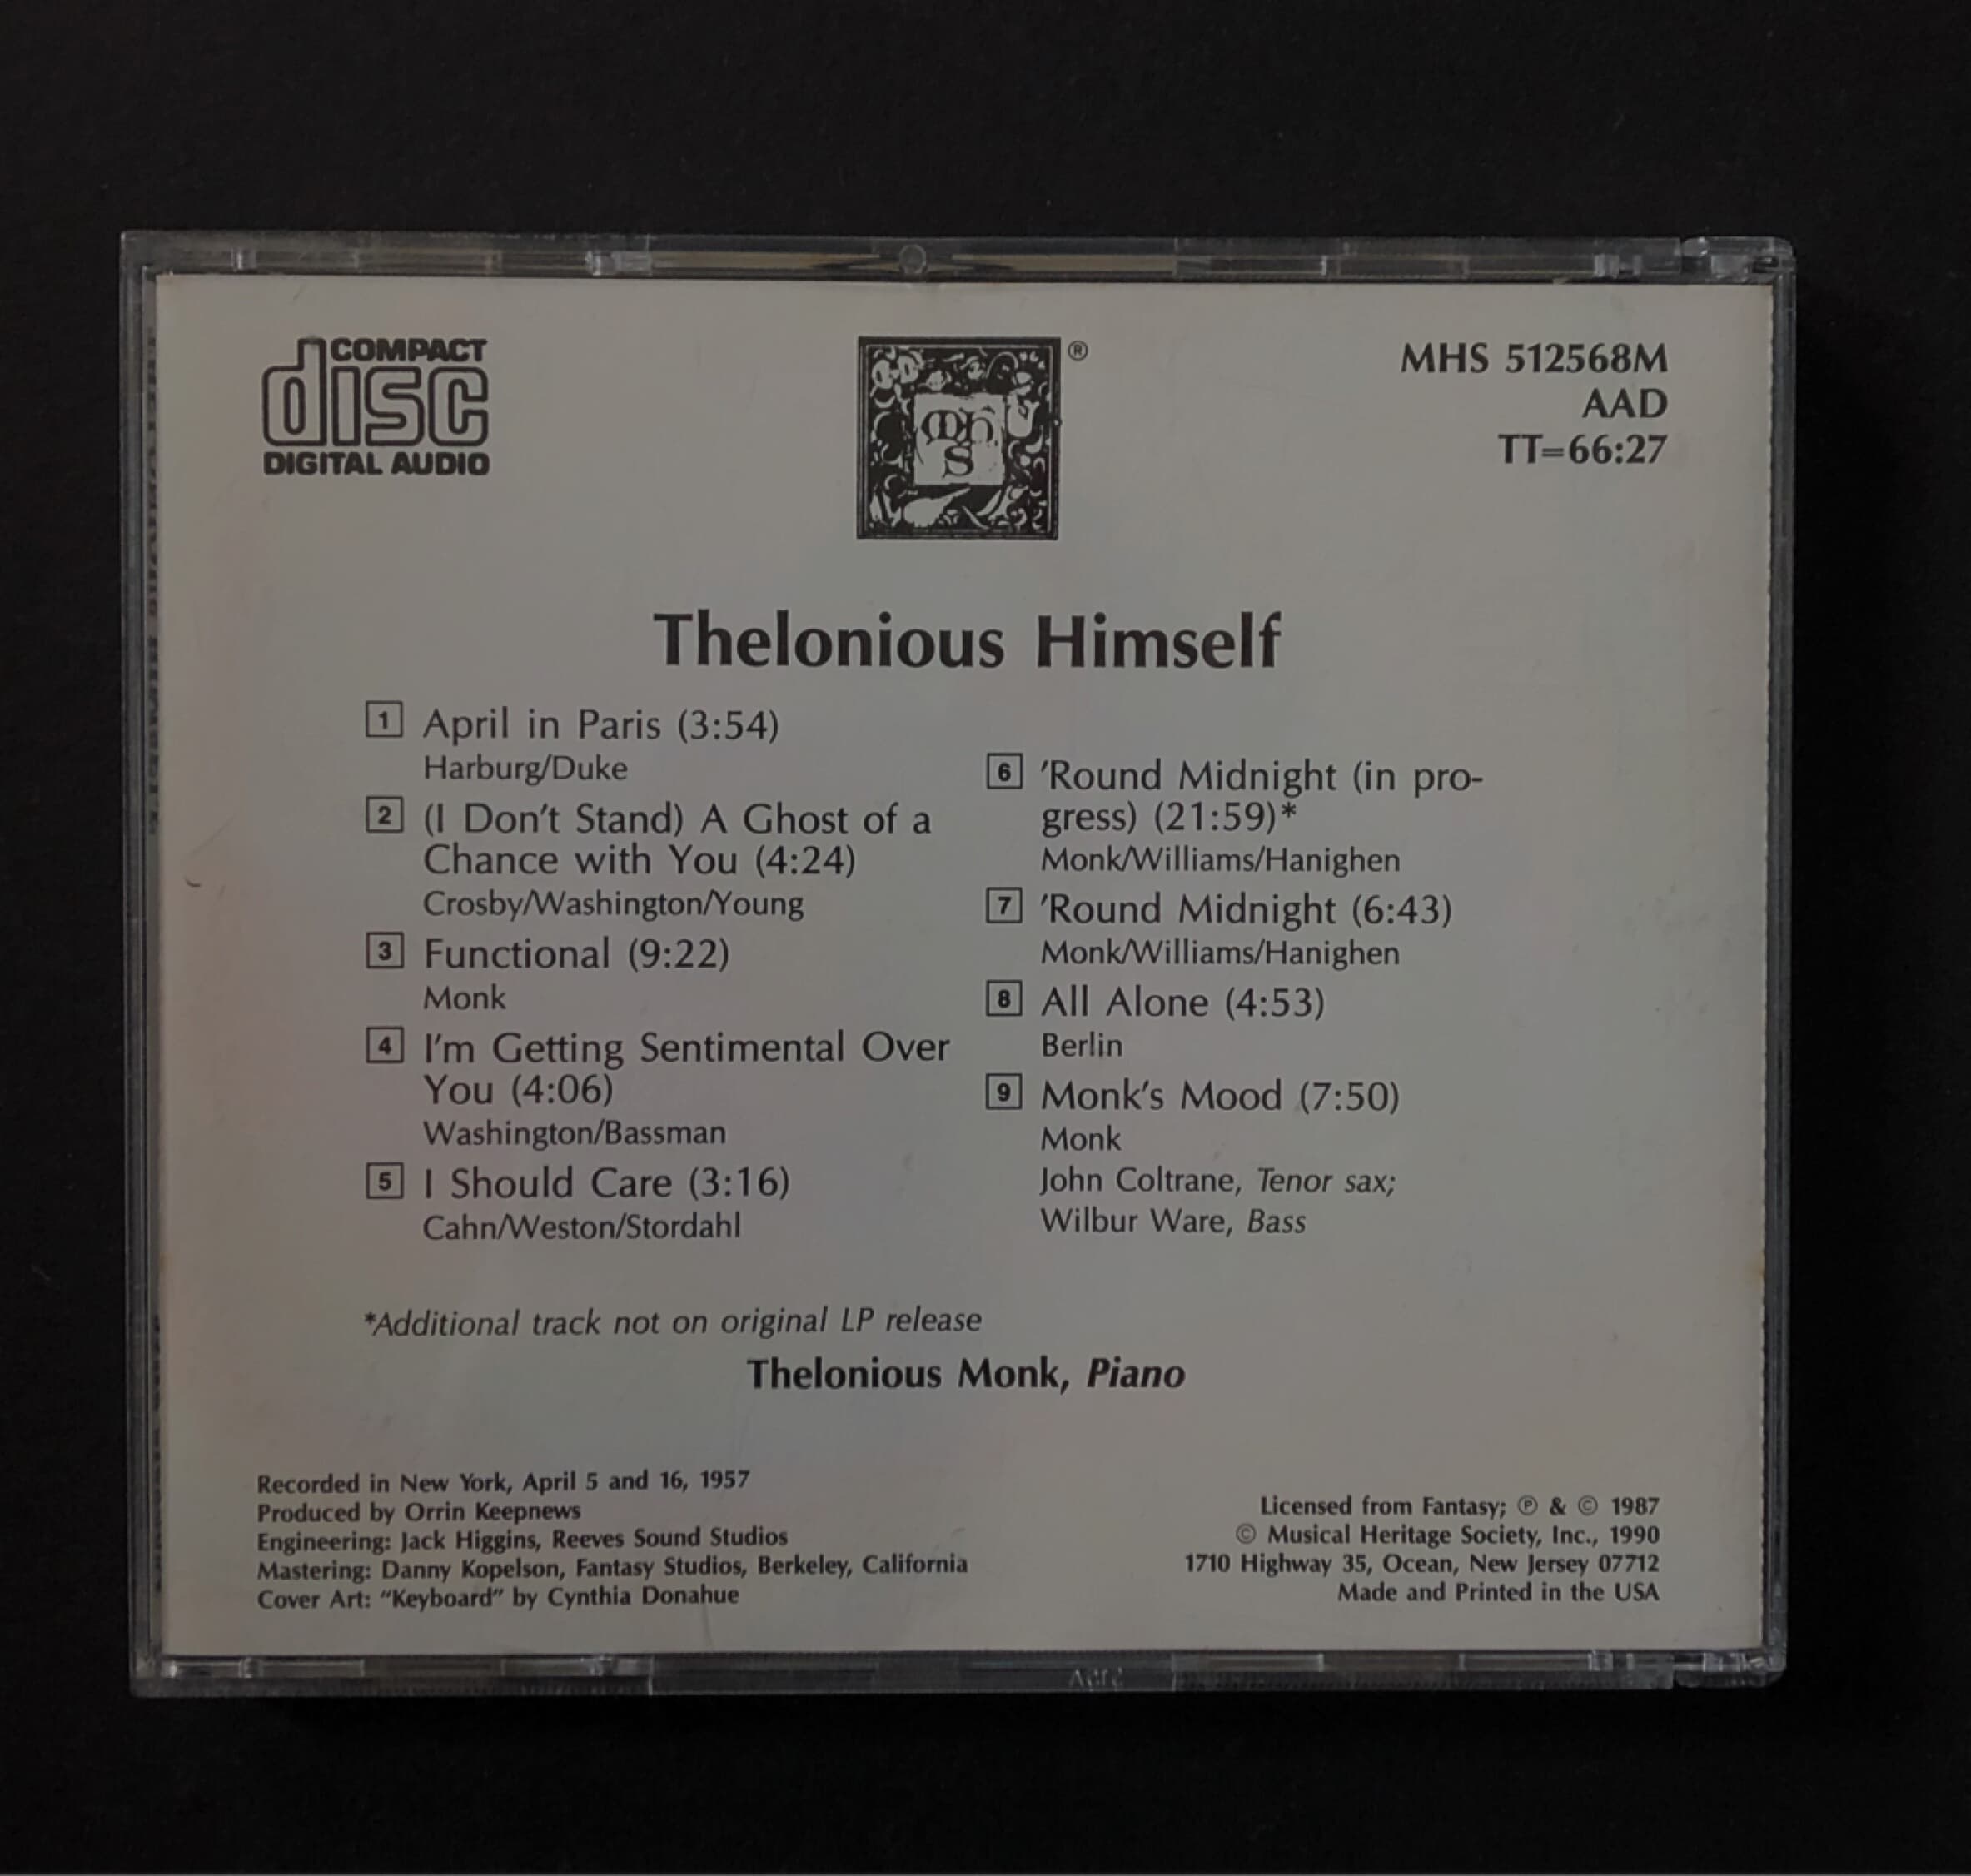 [CD] 수입반  THELONIOUS MONK - THELONIOUS HIMSELF  (US발매)